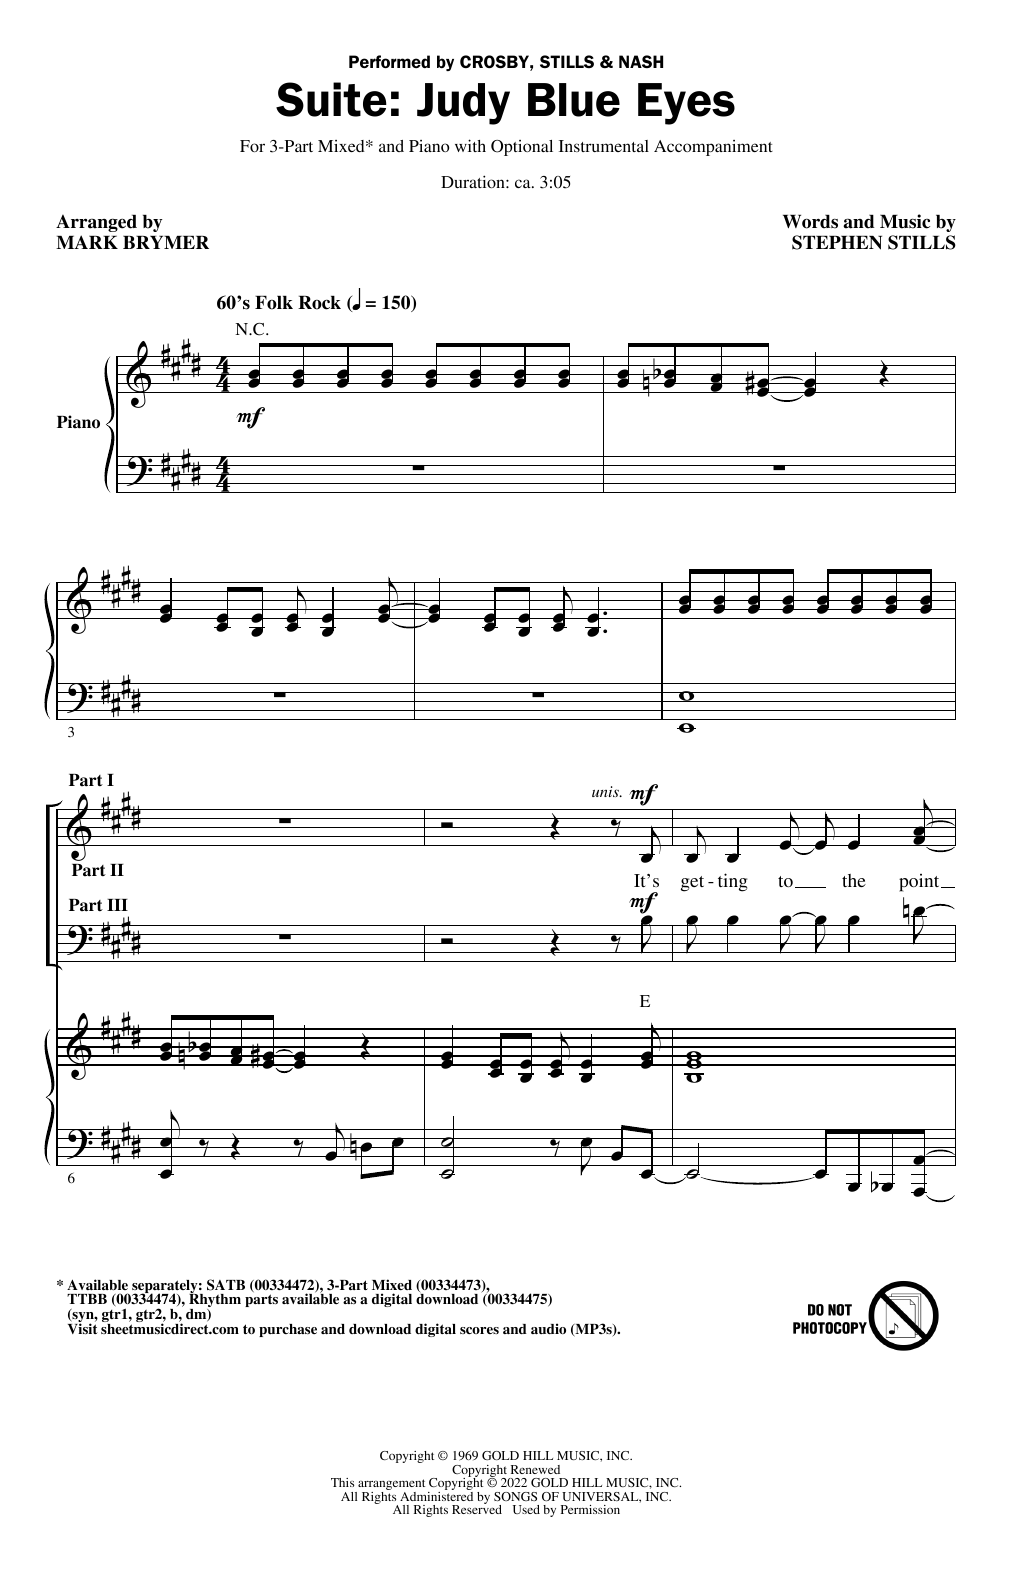 Crosby, Stills & Nash Suite: Judy Blue Eyes (arr. Mark Brymer) Sheet Music Notes & Chords for TTBB Choir - Download or Print PDF